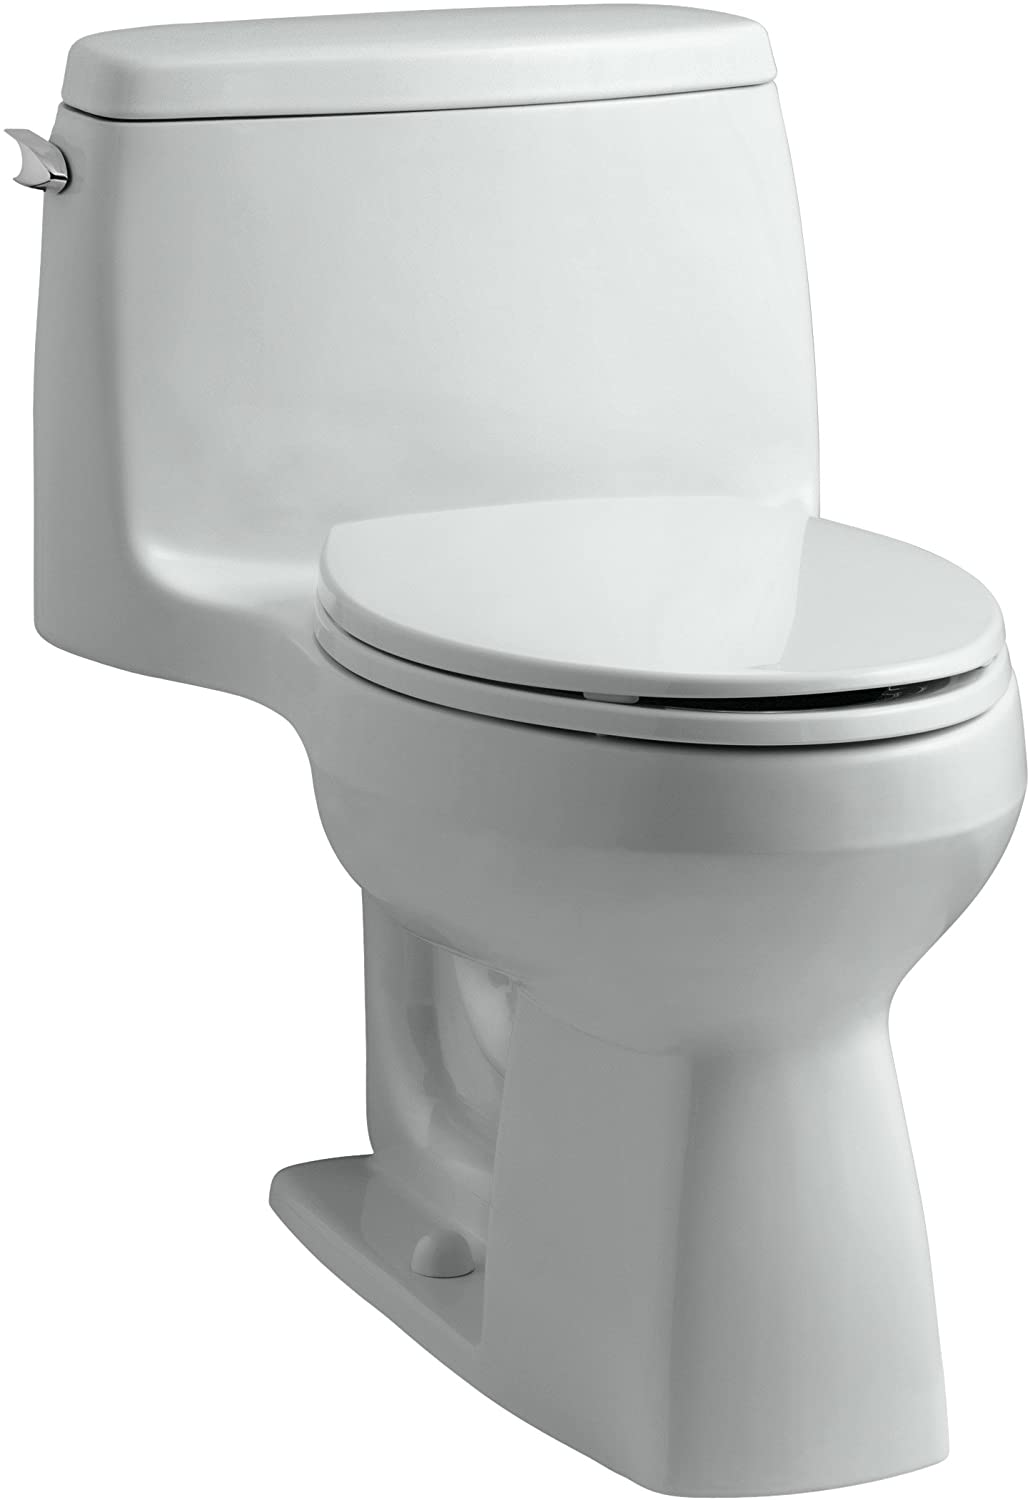 Kohler 3810-95 One-Piece Compact Toilet